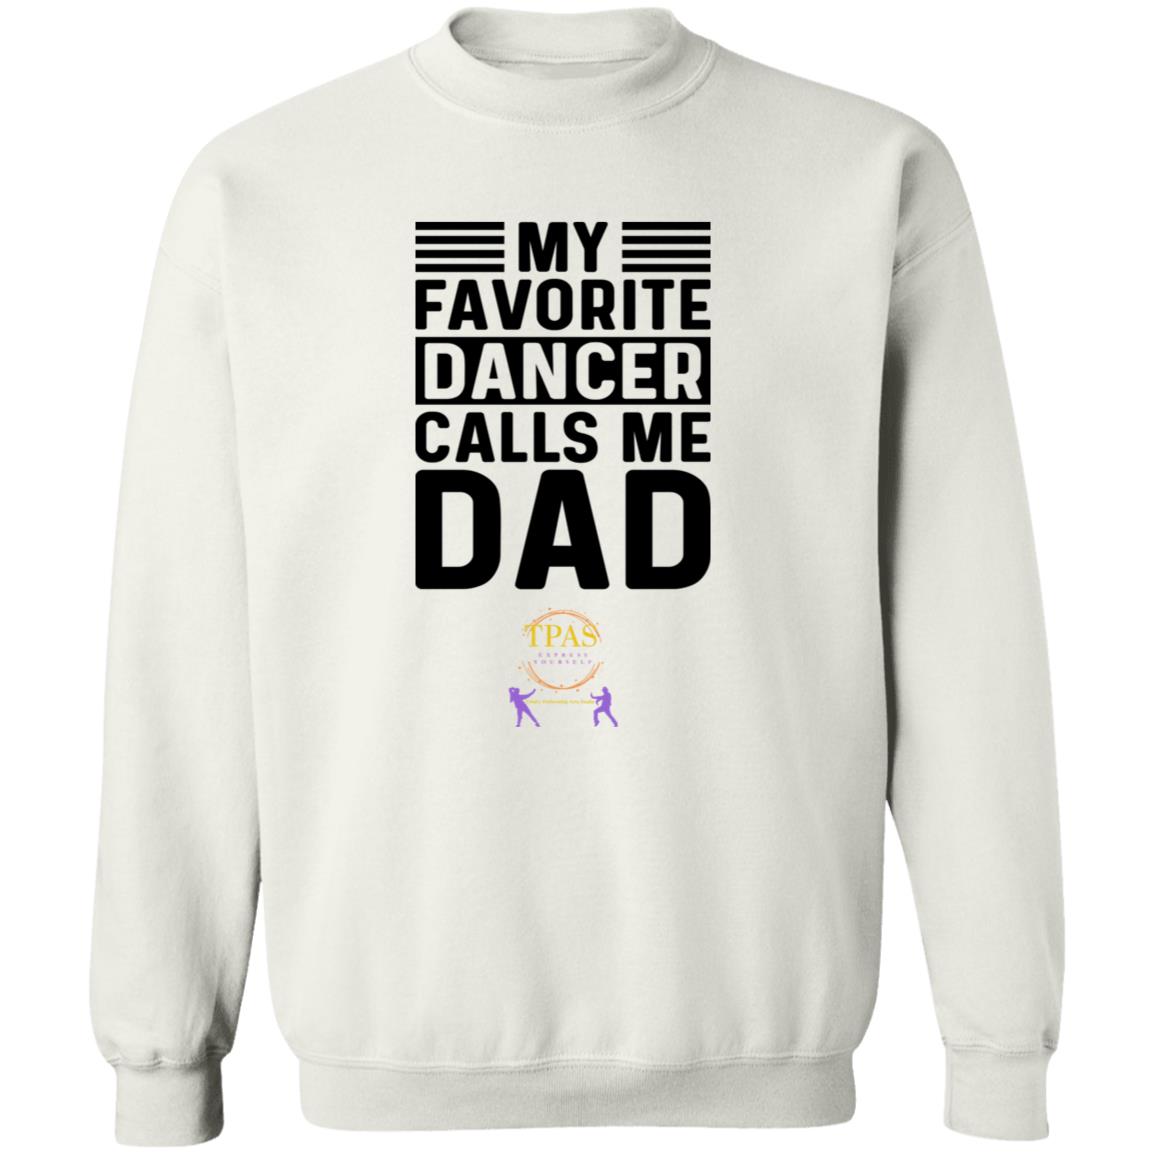 TPAS My Favorite Dancer Calls Me Dad! Crewneck Pullover Sweatshirt